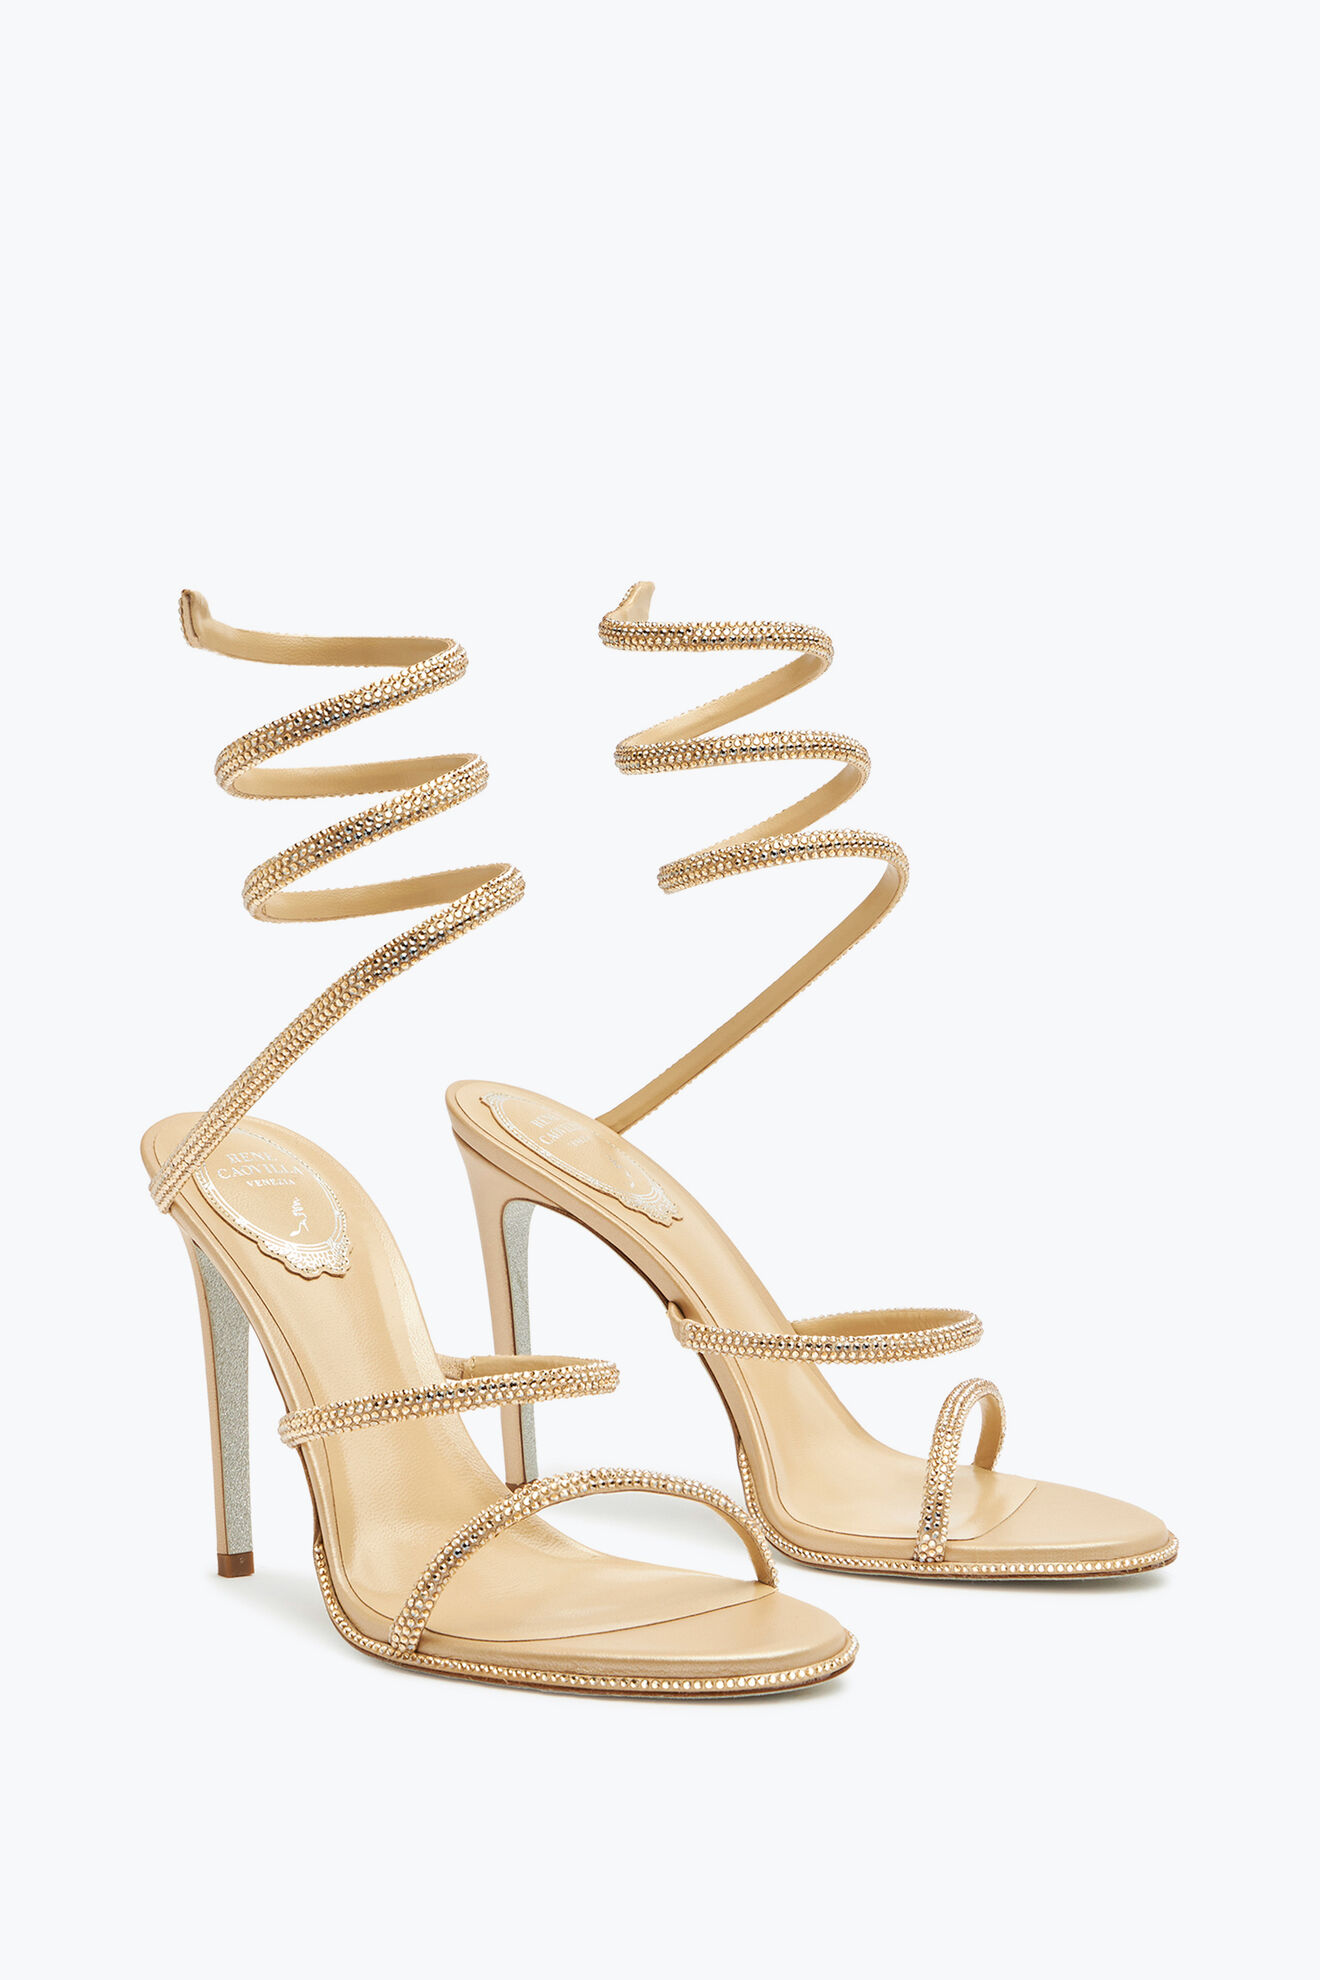 Cleo Gold Sandal 105 Sandals in Beige for Women | Rene Caovilla®